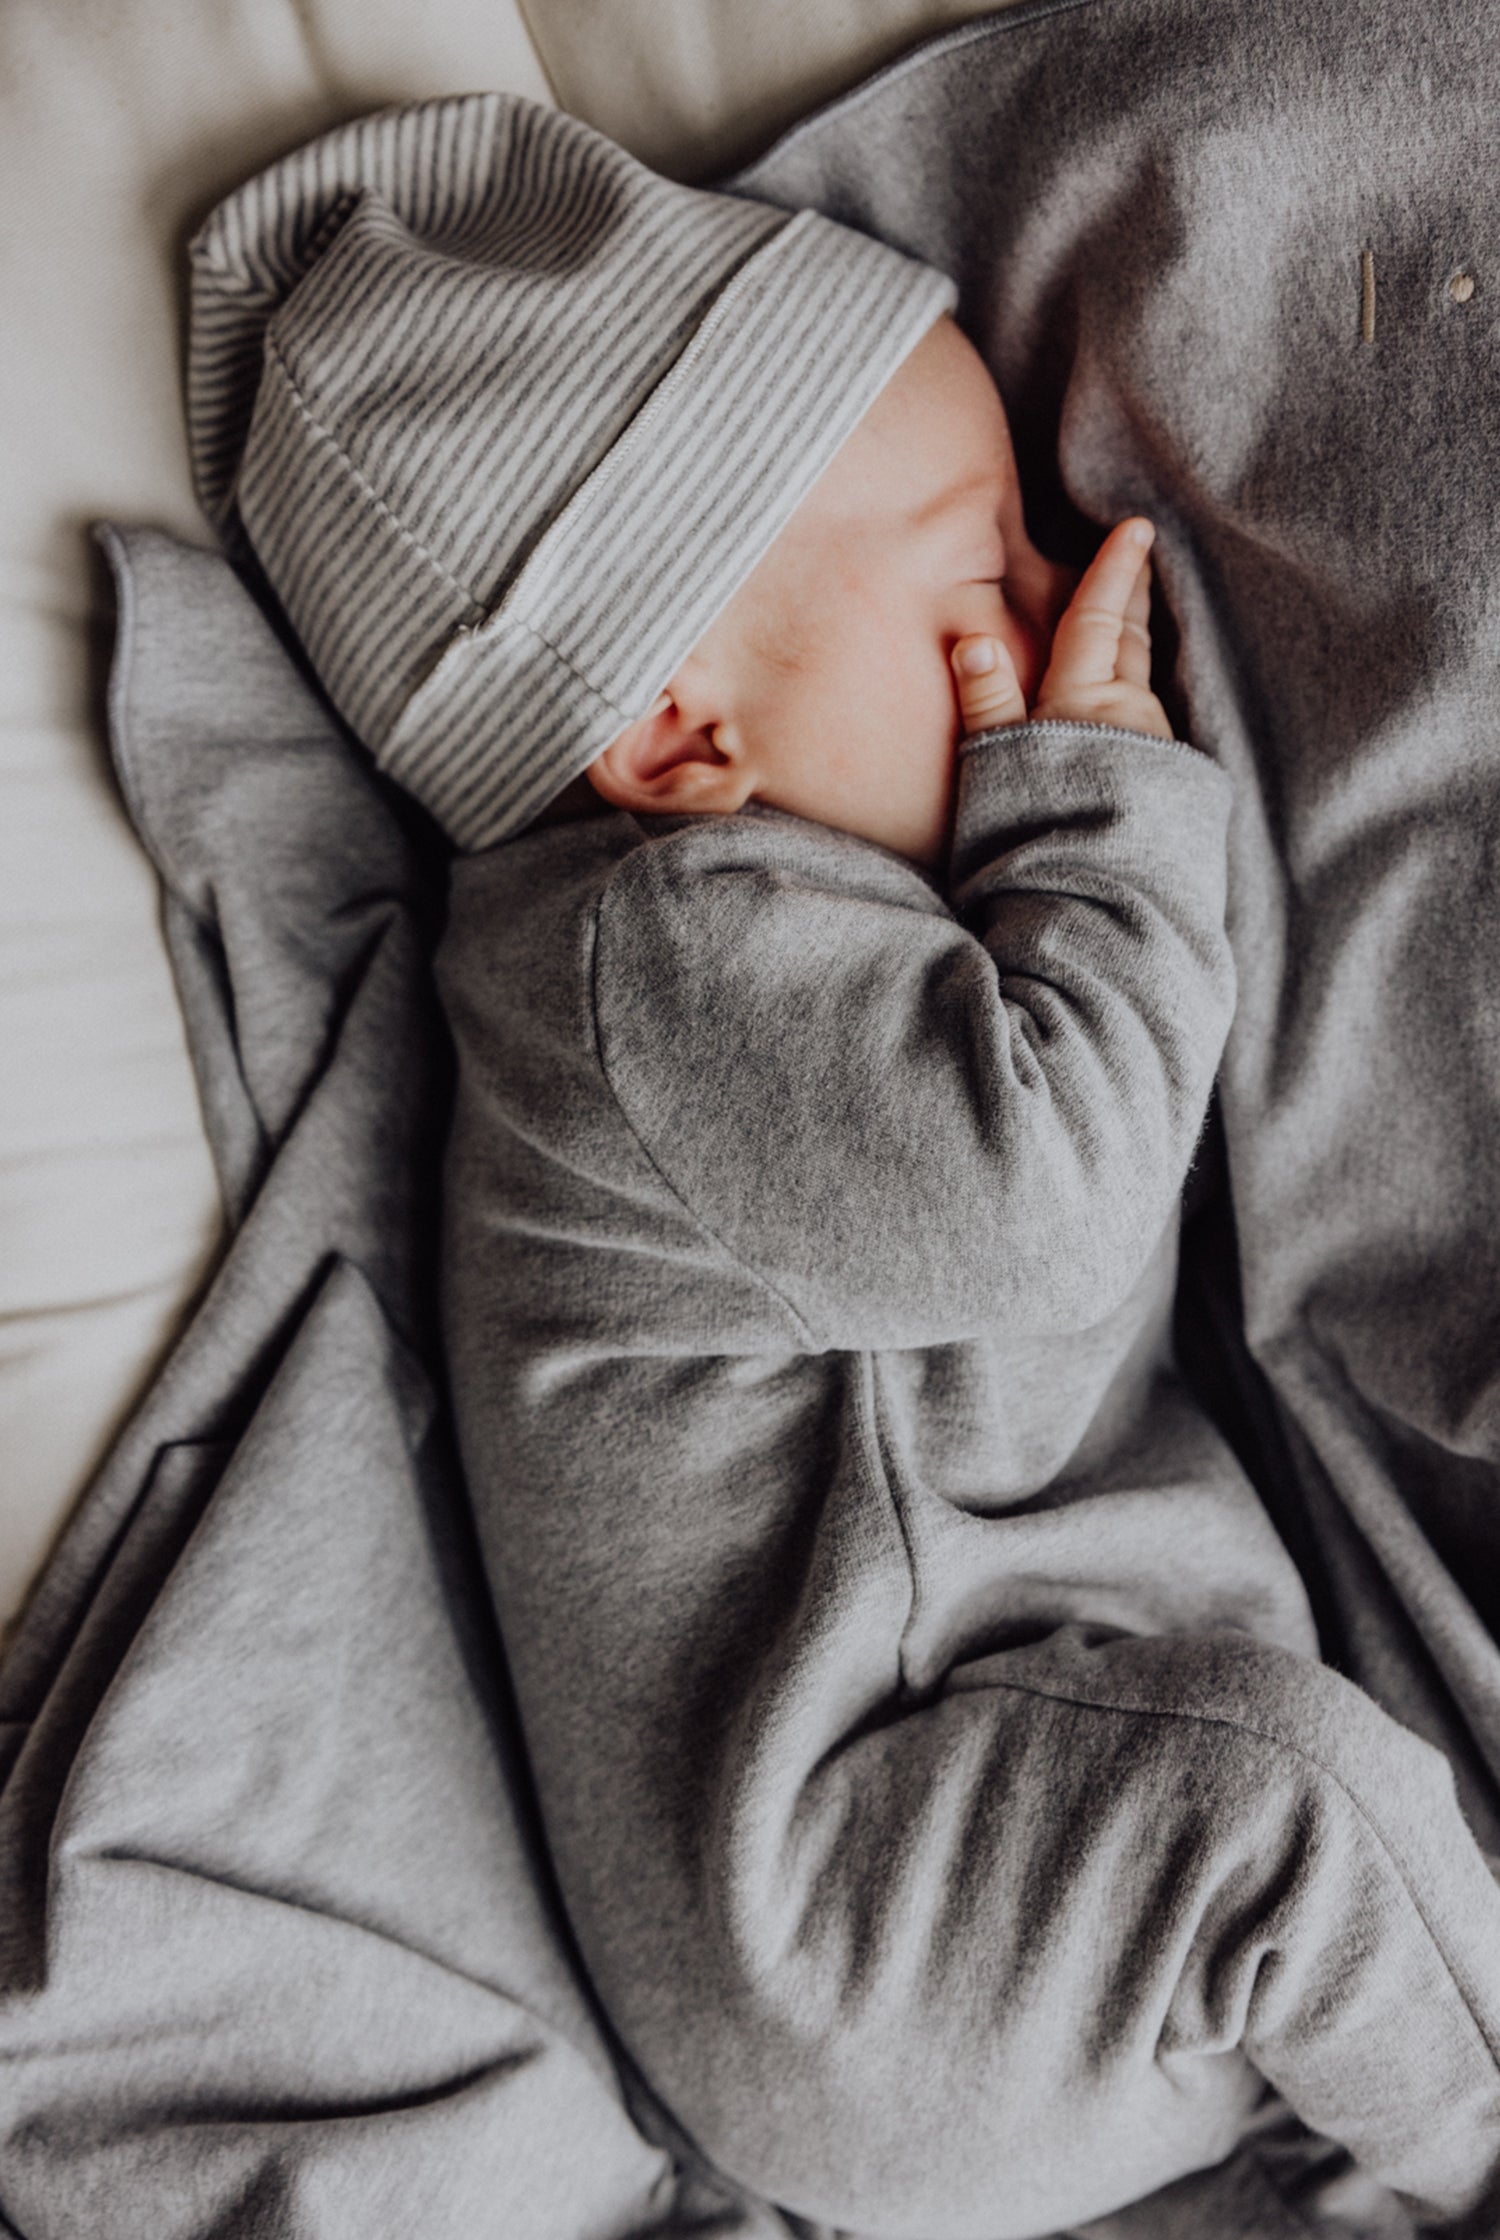 Newborn Suit with Snaps | Grey Melange